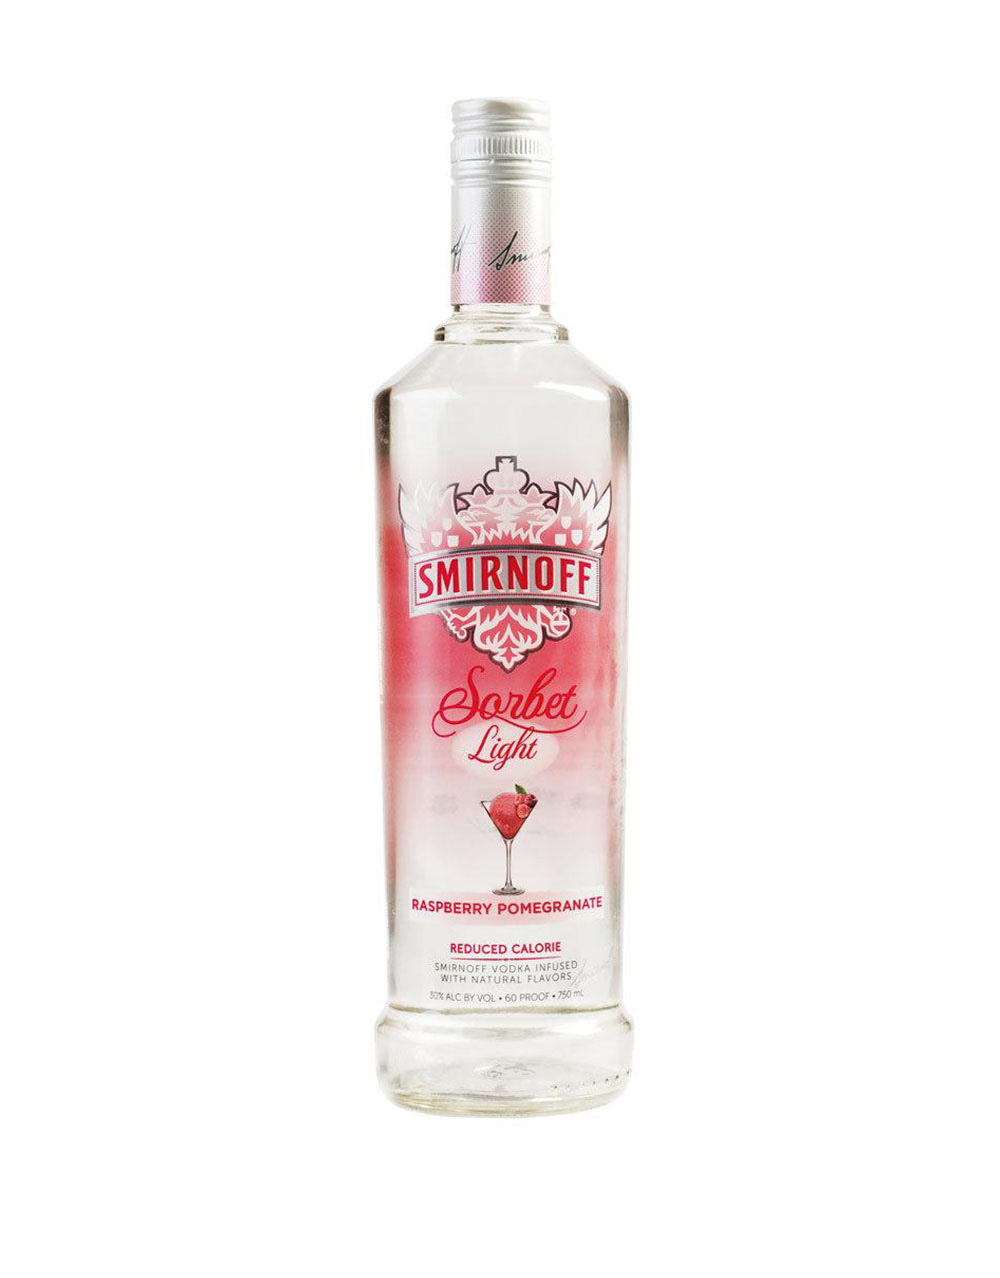 Smirnoff Sorbet Light Raspberry Pomegranate Vodka